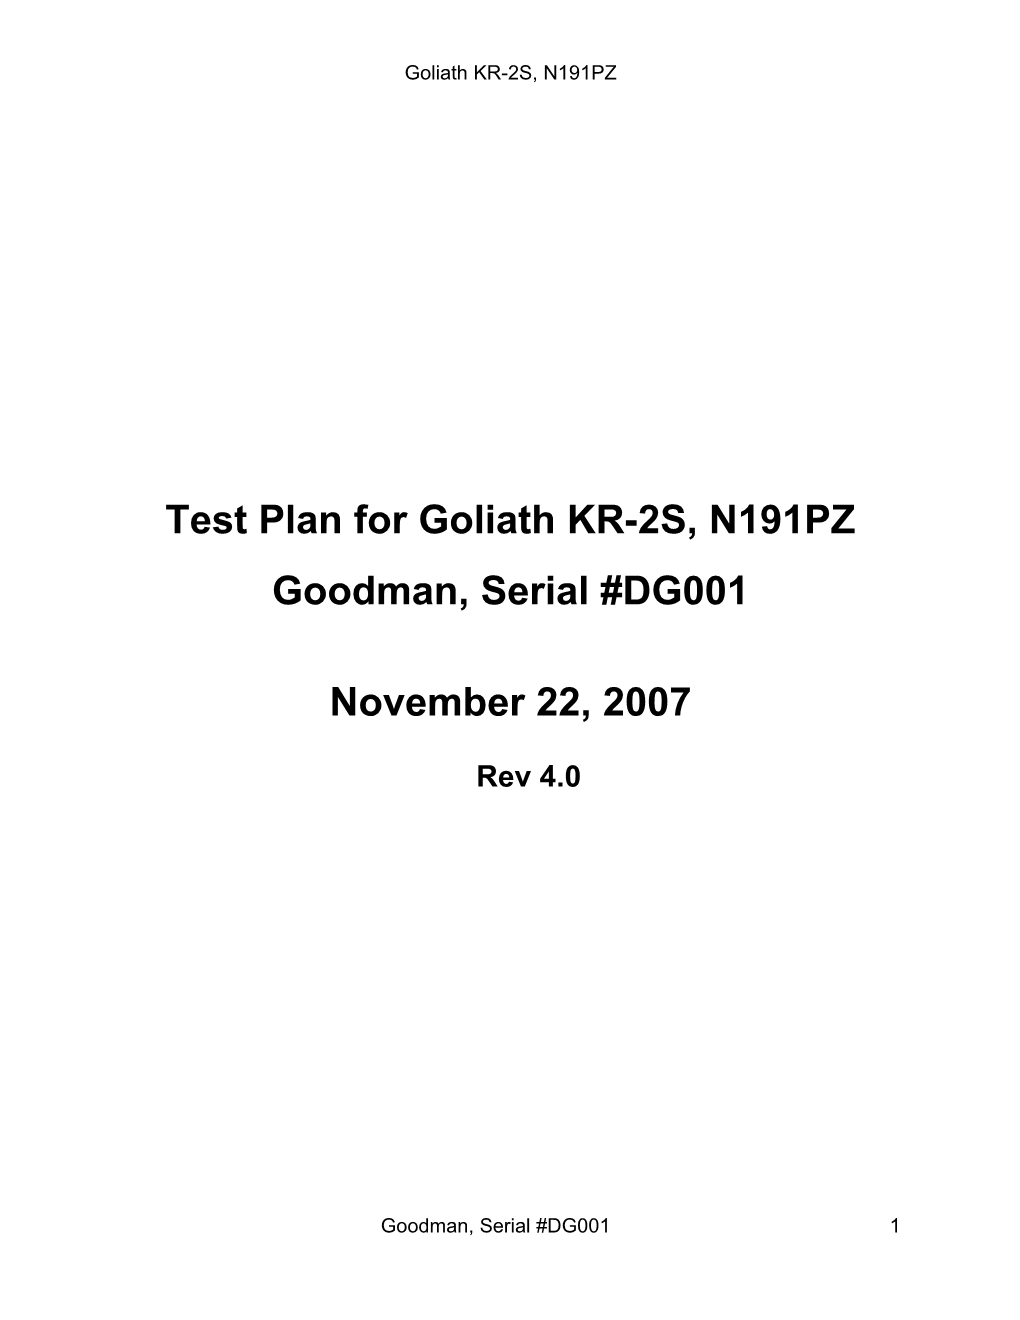 Junkman S KR-2S Test Plan